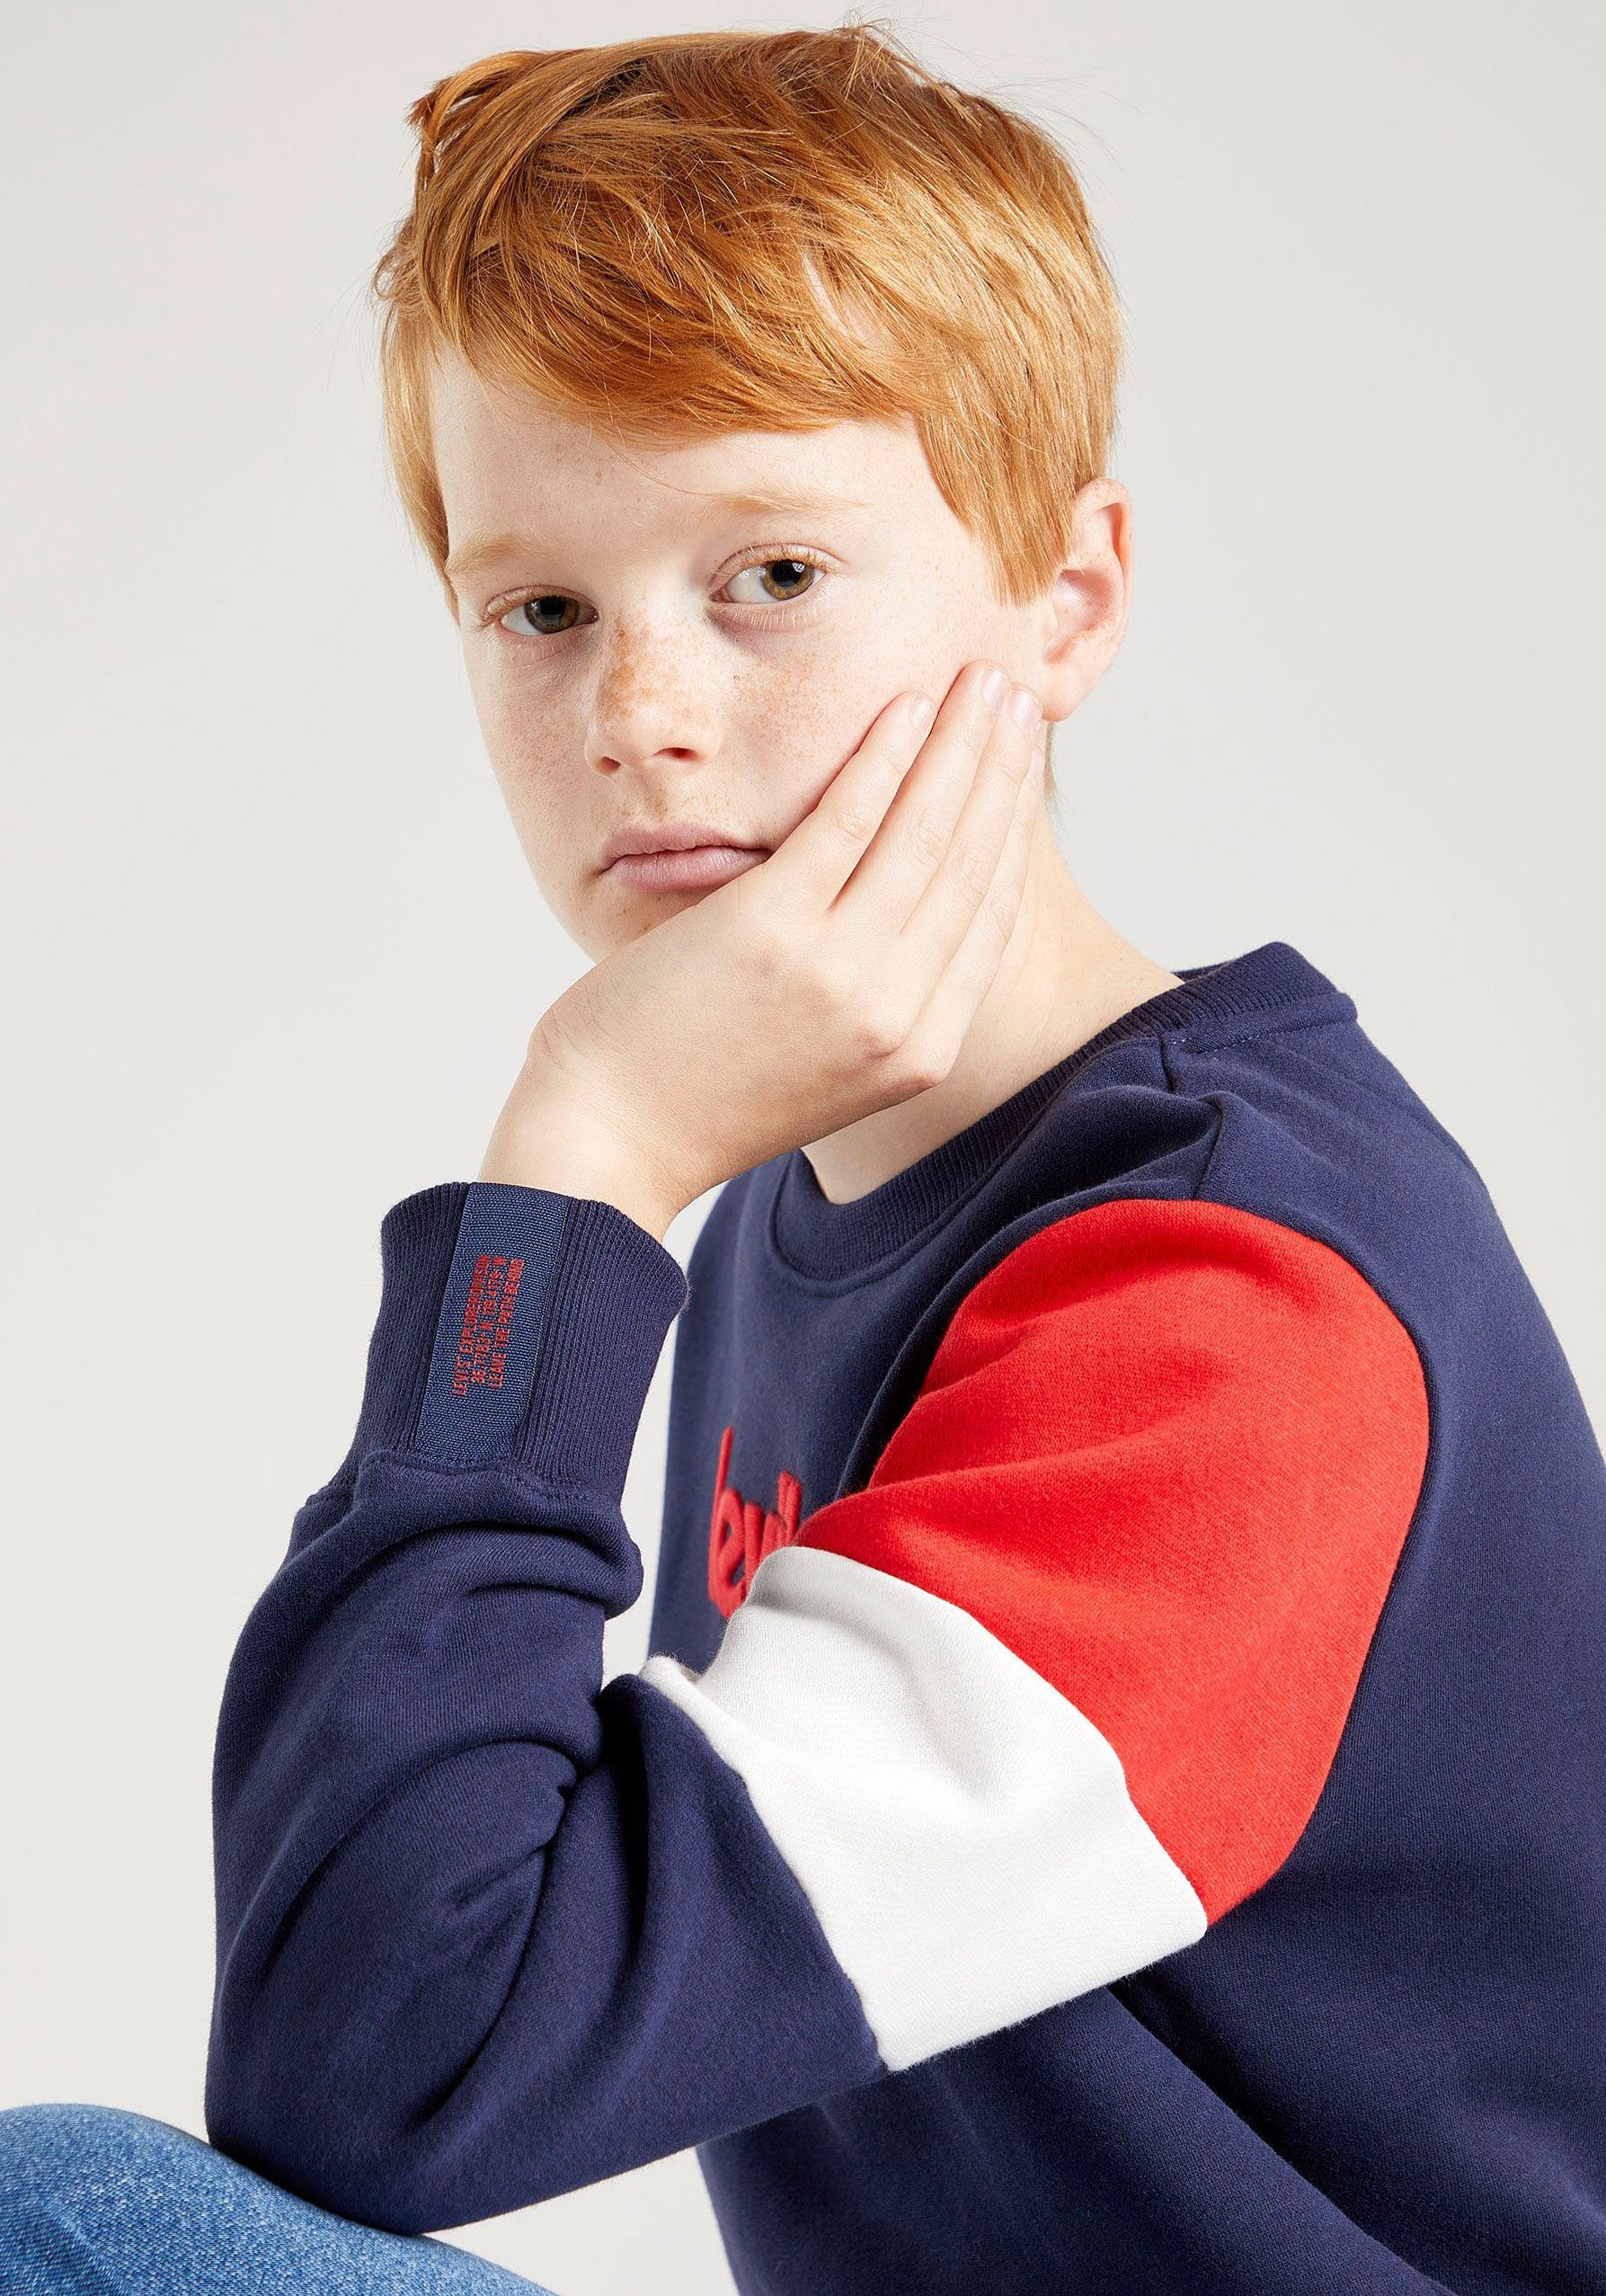 Sweatshirt BOYS Kids for Levi's® COLORBLOCKED CREW